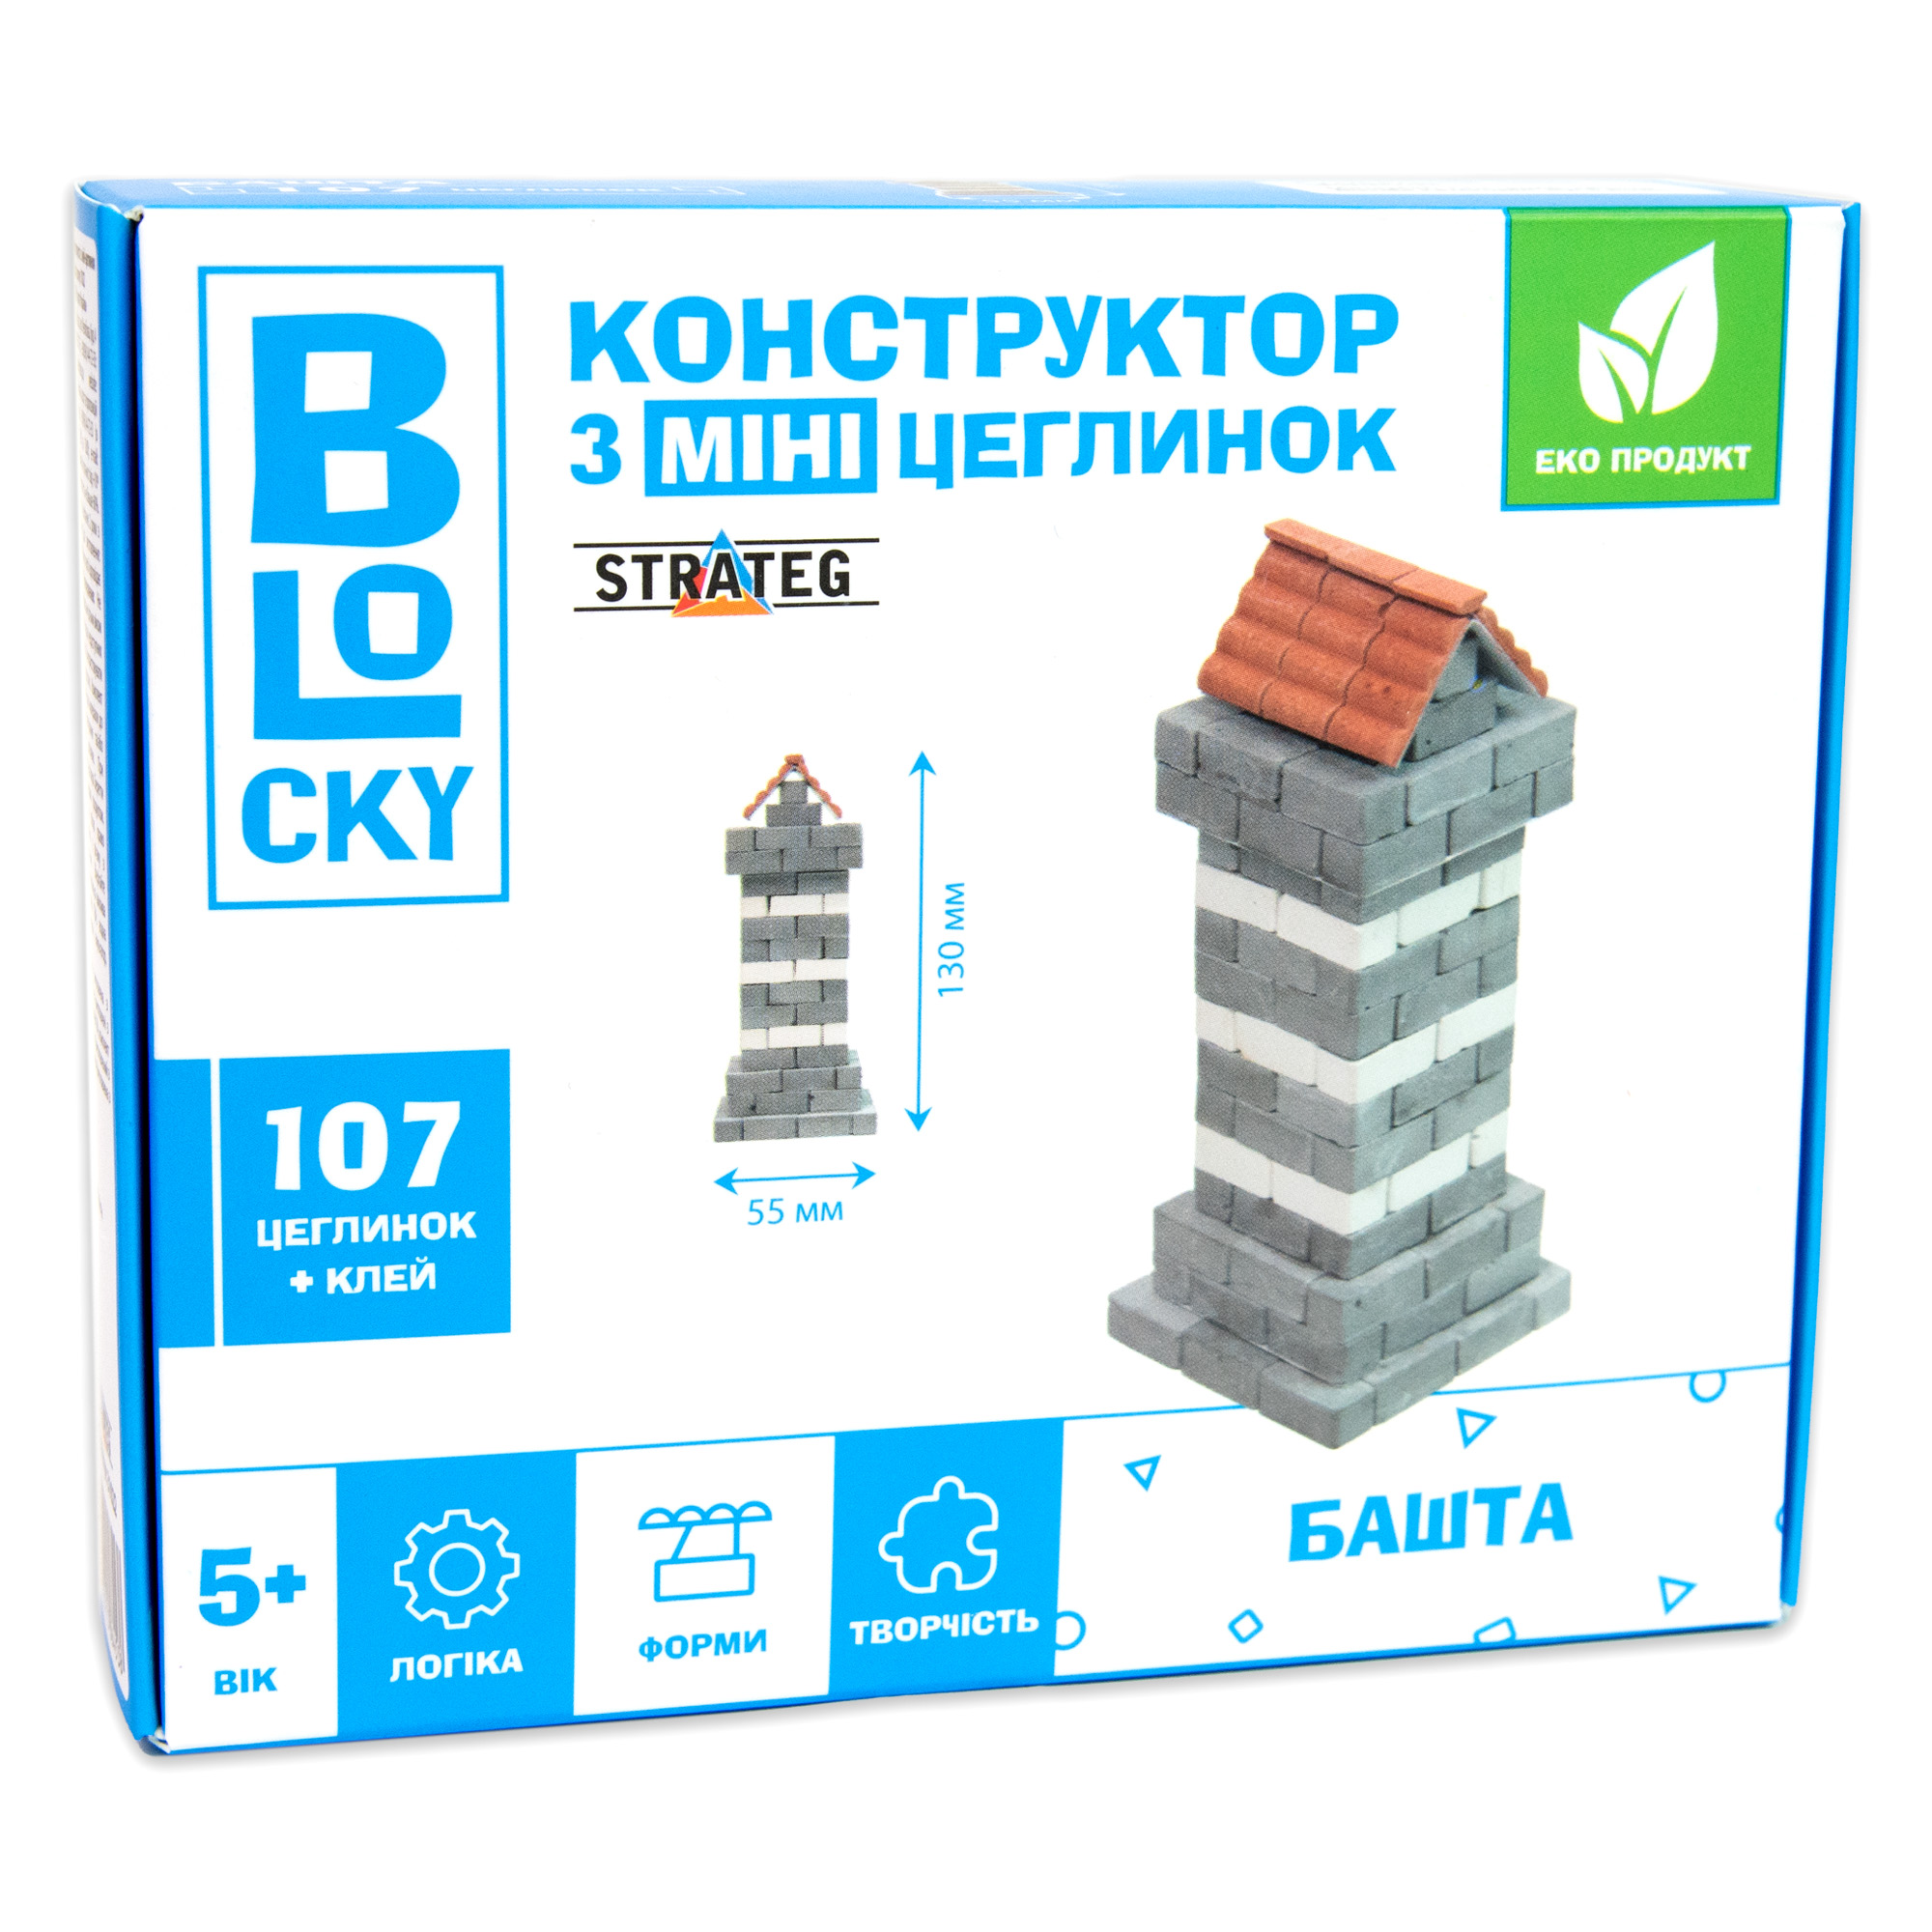 Building set for creativity with mini-bricks BLOCKY Tower Strateg (31022)